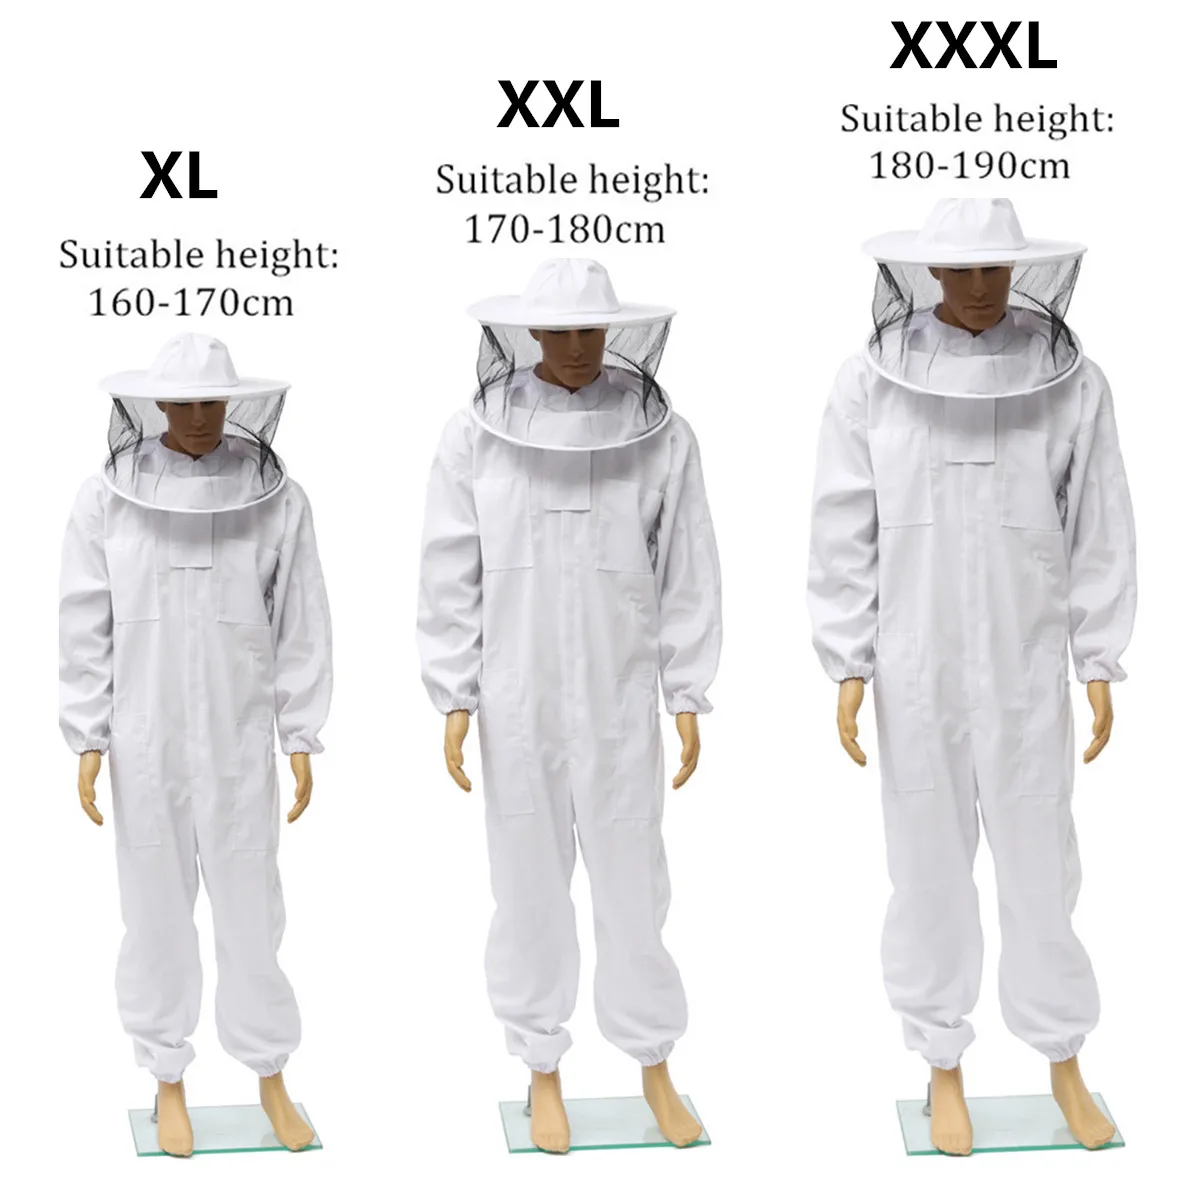 L/XL/XXL full body Bee Keeping Suit w/Veil Hood Beekeeper Equipment Cotton UPS 